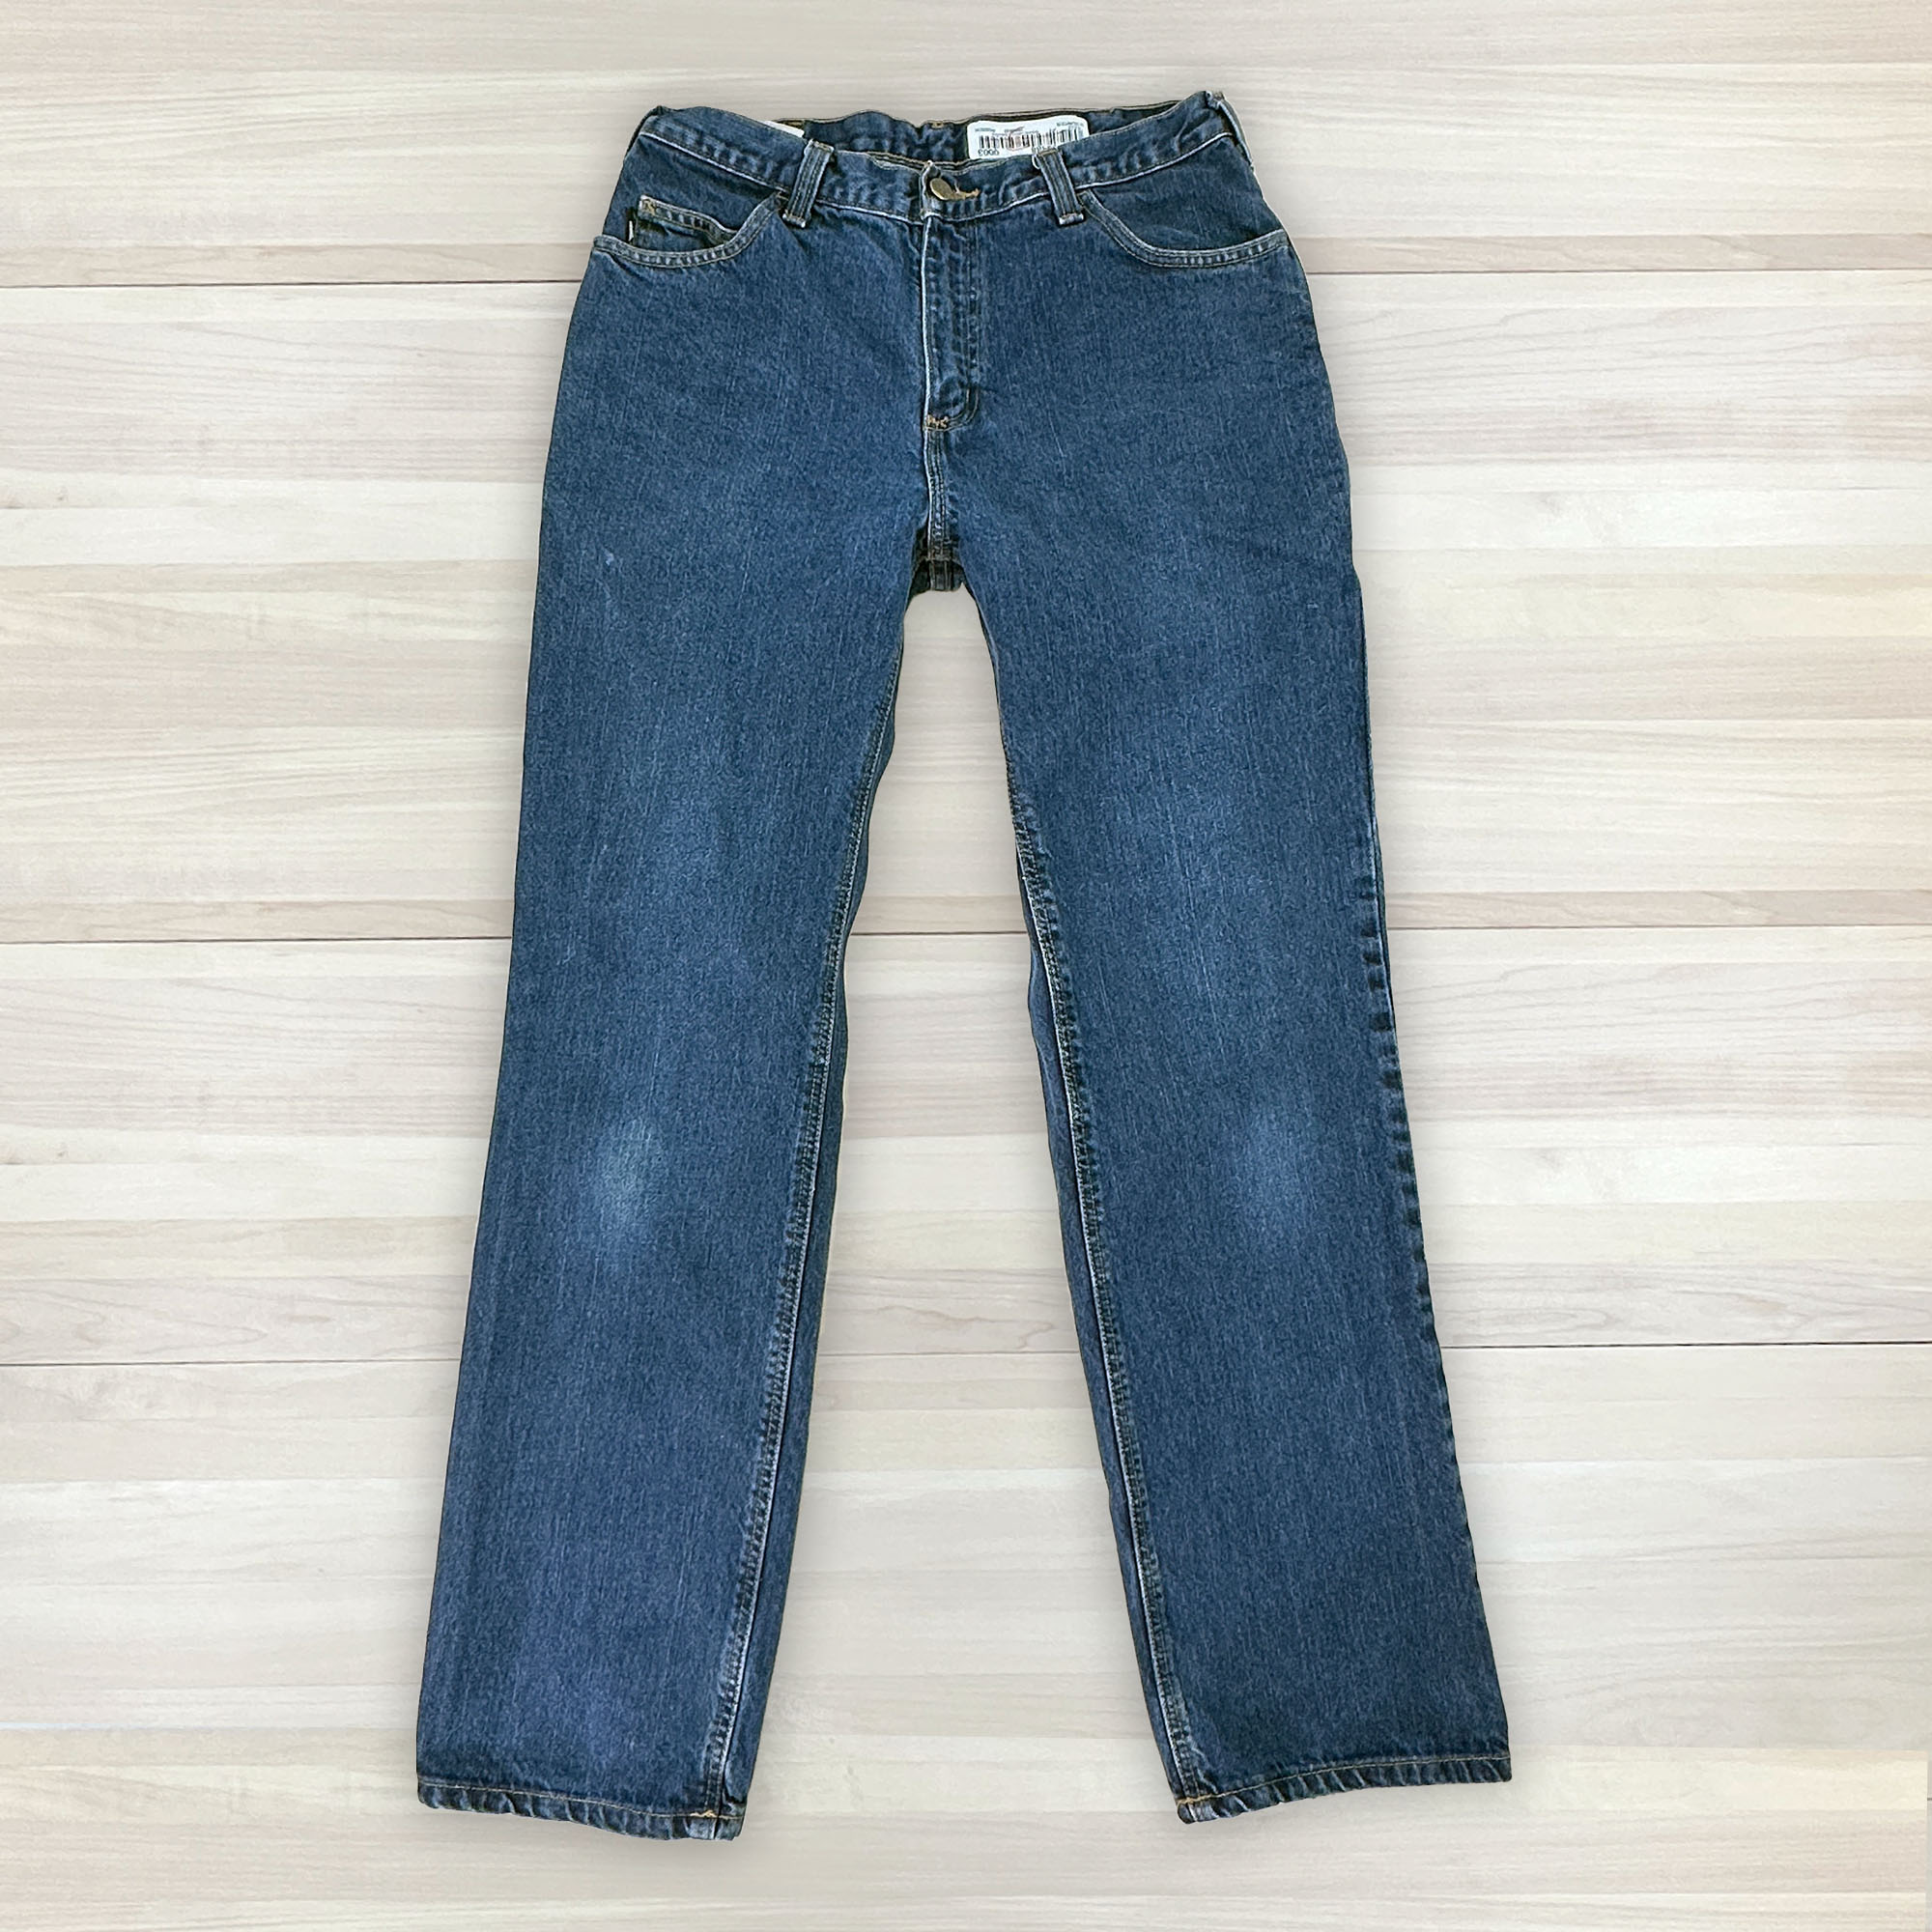 Carhartt FBR13DNM Flame Resistant Jeans - Great Lakes Reclaimed Denim